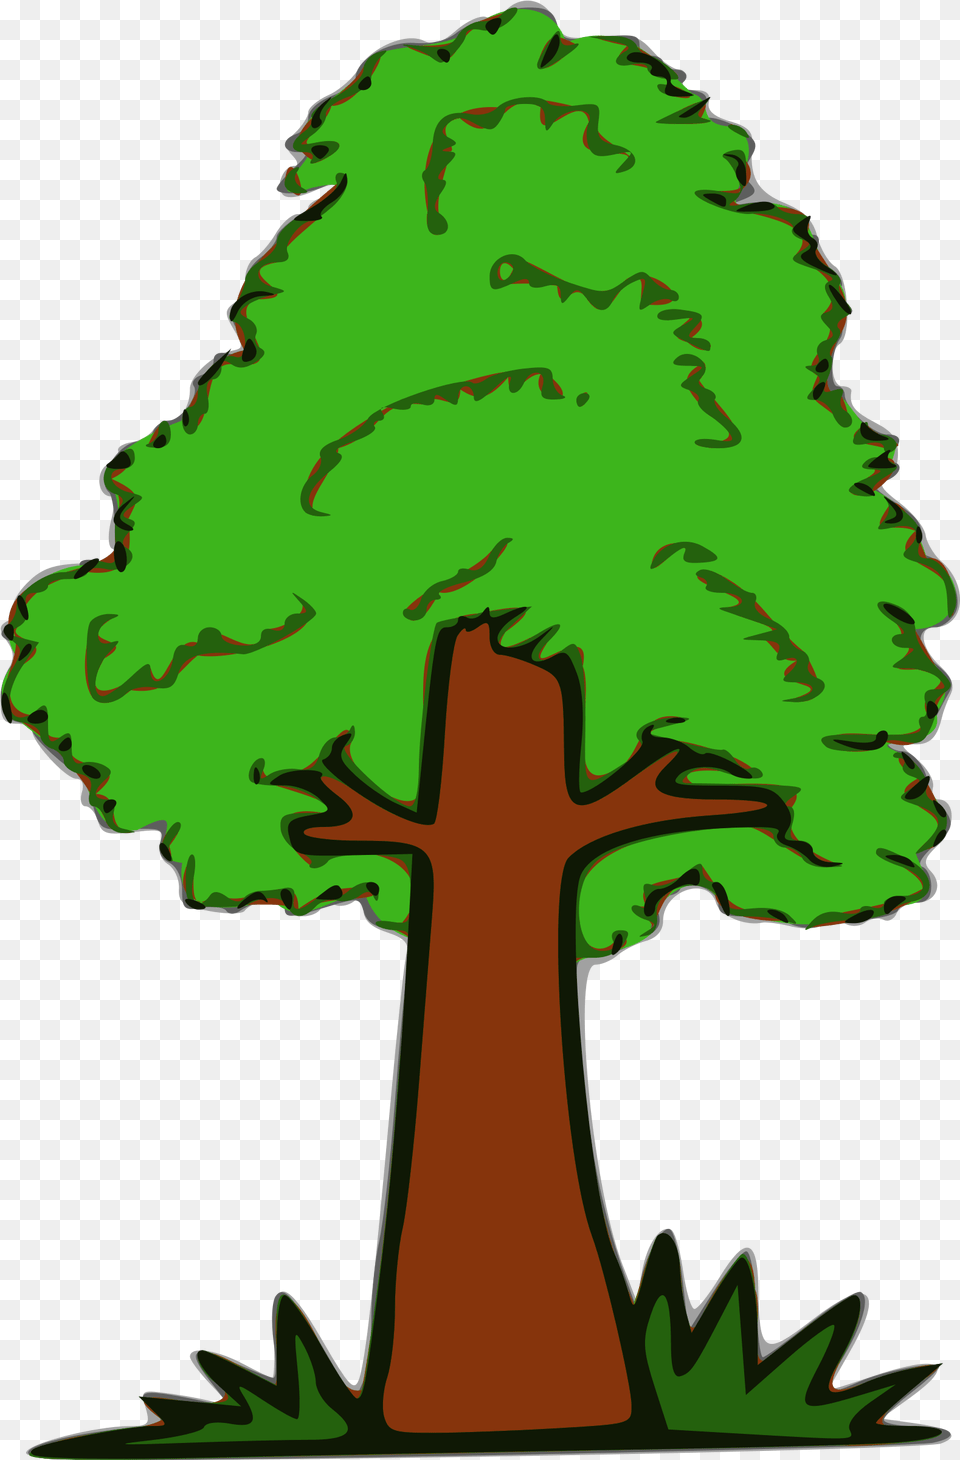 Simple Picture Of Tree Simple Picture Of Tree, Green, Vegetation, Plant, Tree Trunk Free Transparent Png